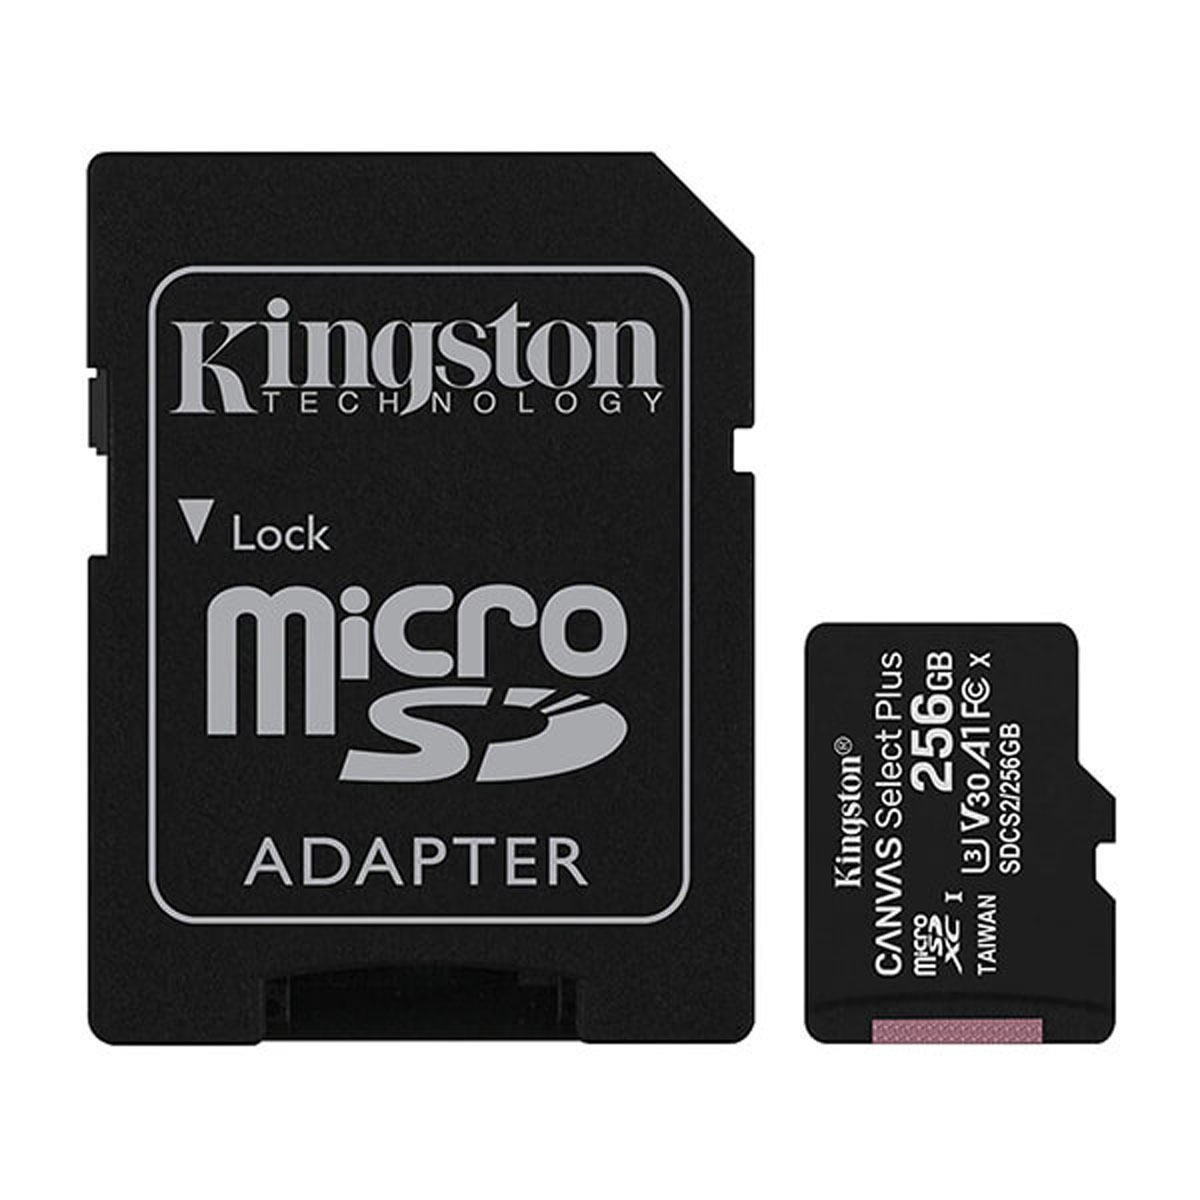 SDCS2/256 MB/s Micro-SD GB, 100 256 GB, Speicherkarte, KINGSTON